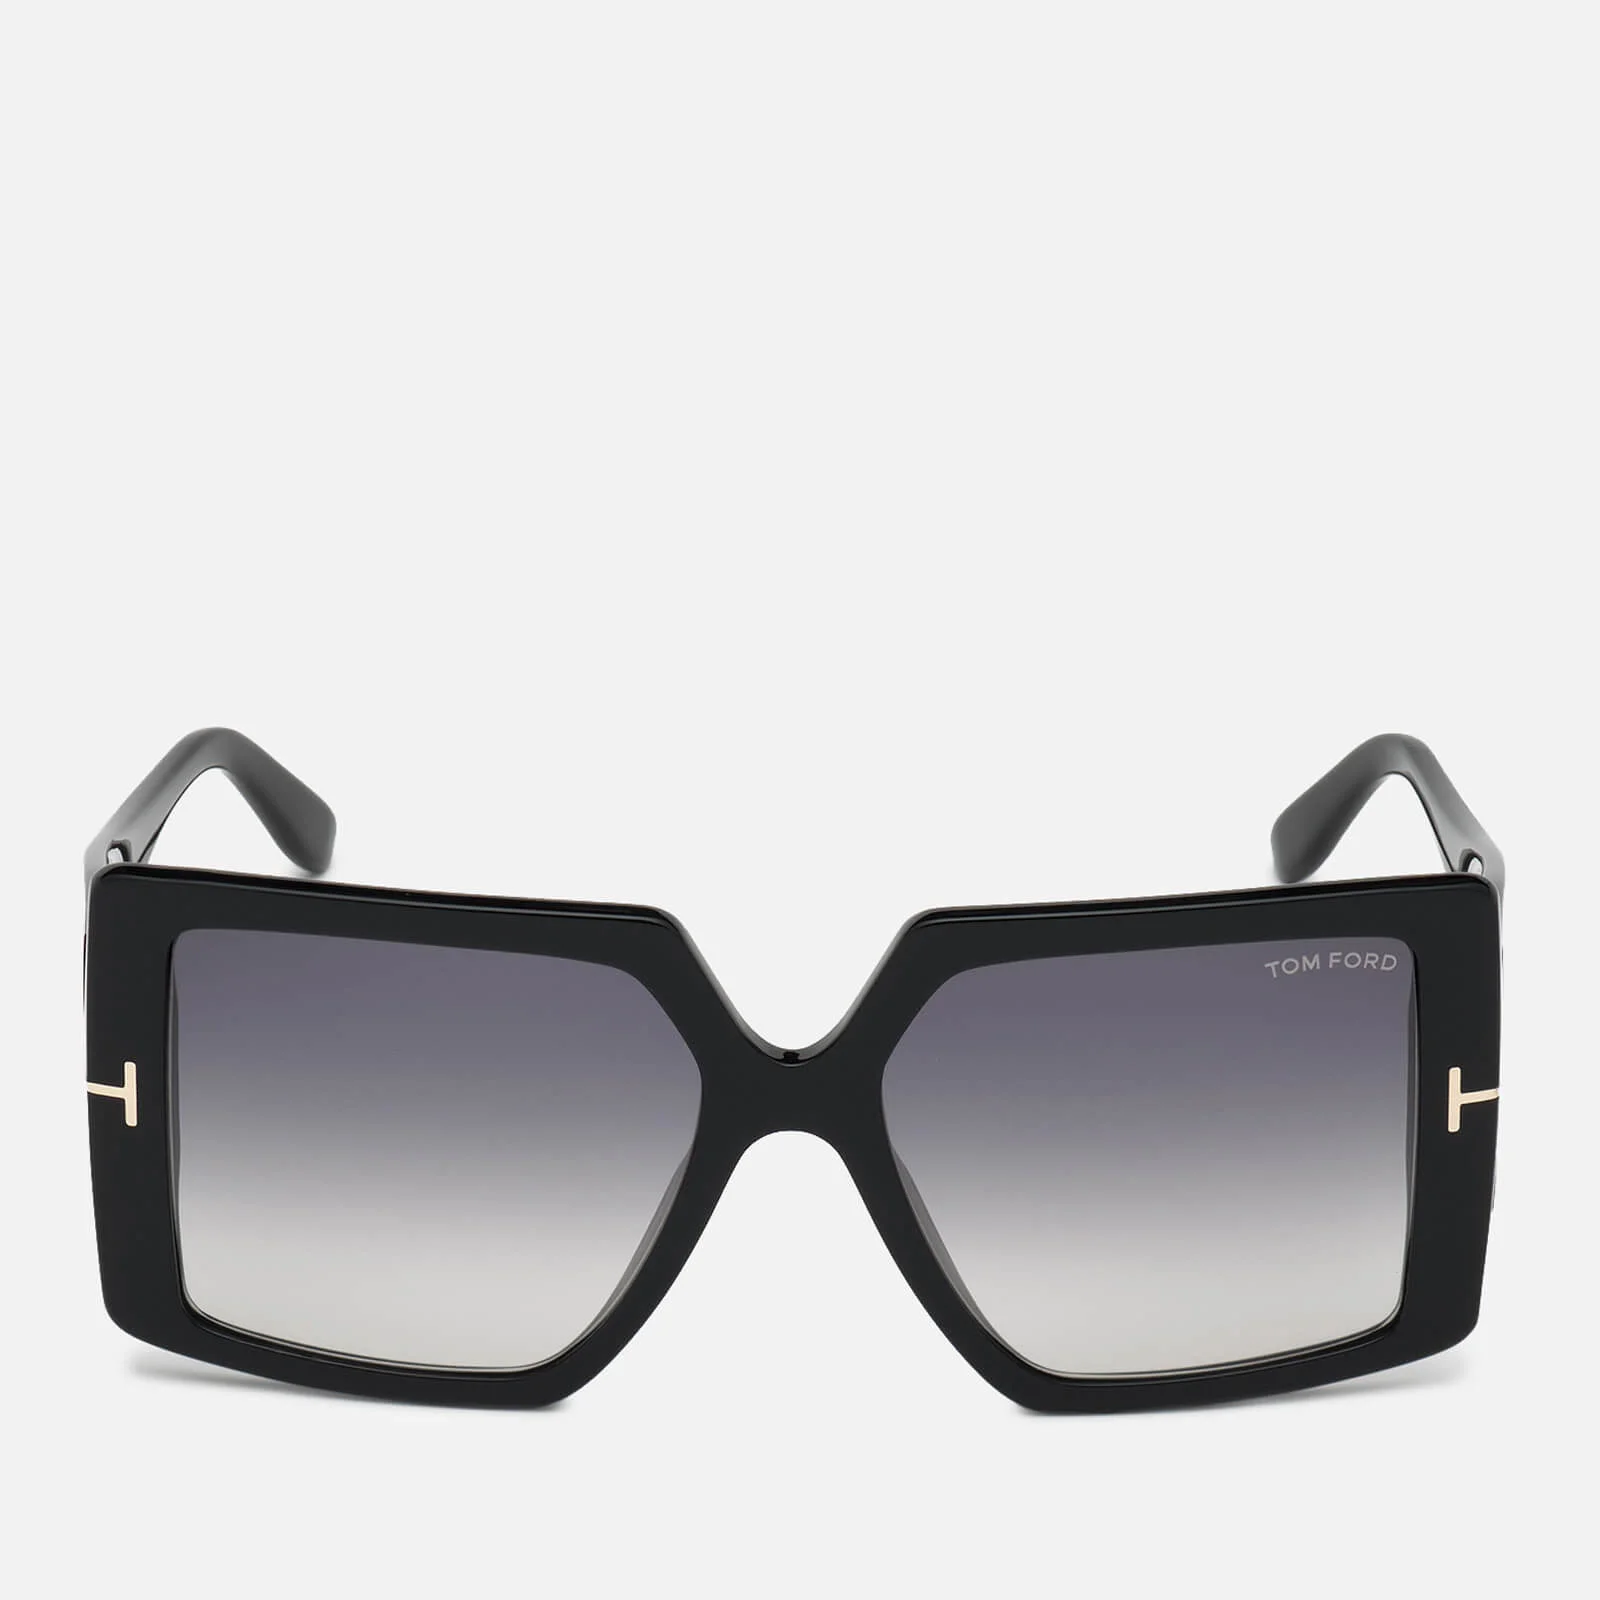 Tom Ford Women's Quinn Square Frame Sunglasses - Black/Smoke Image 1